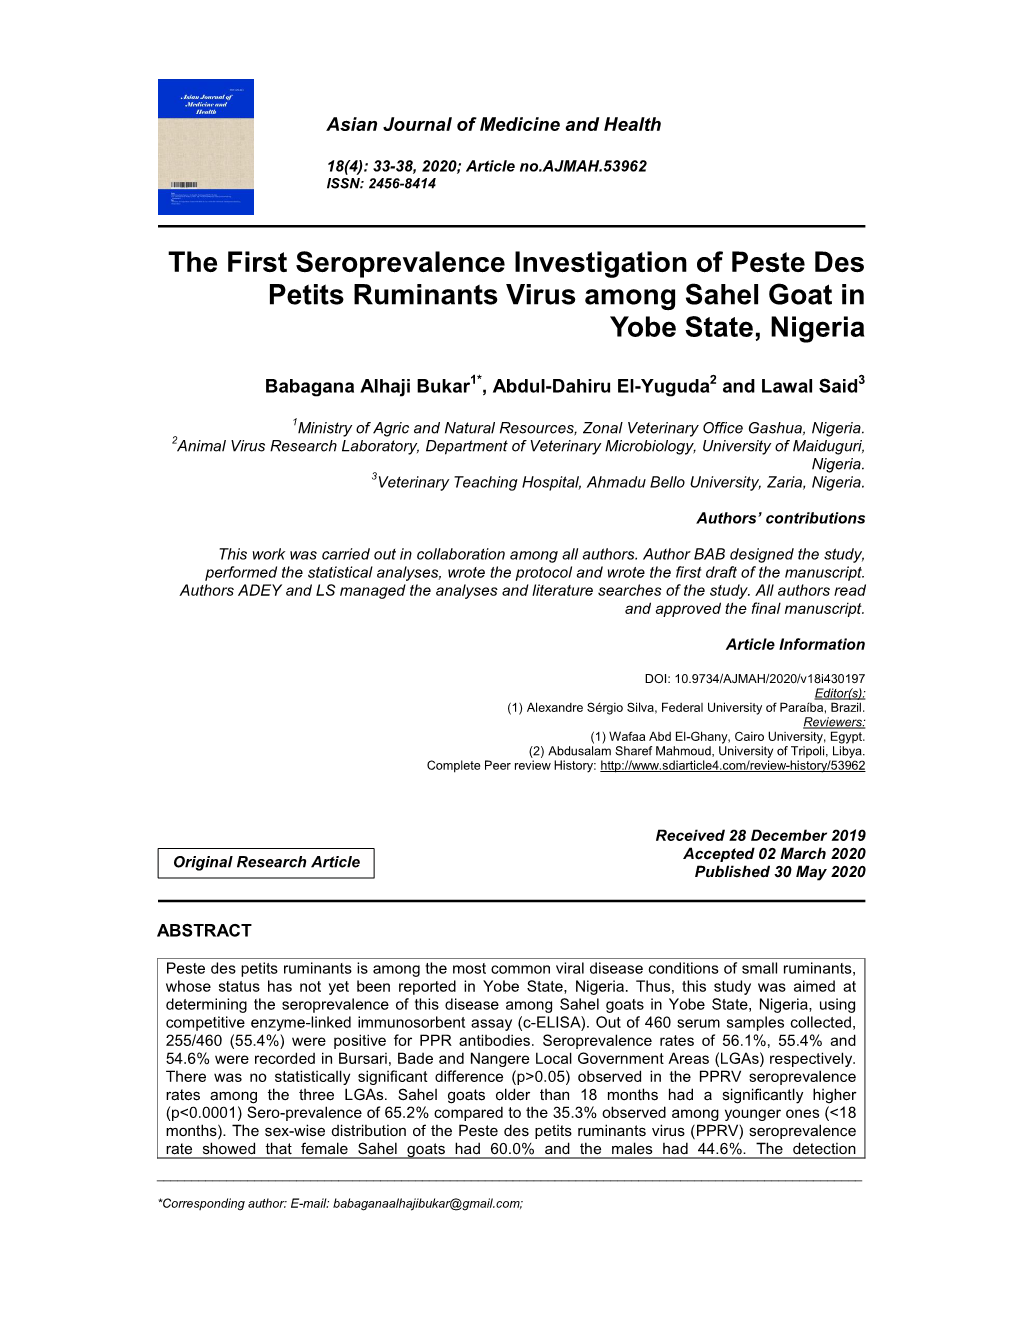 The First Seroprevalence Investigation of Peste Des Petits Ruminants Virus Among Sahel Goat in Yobe State, Nigeria